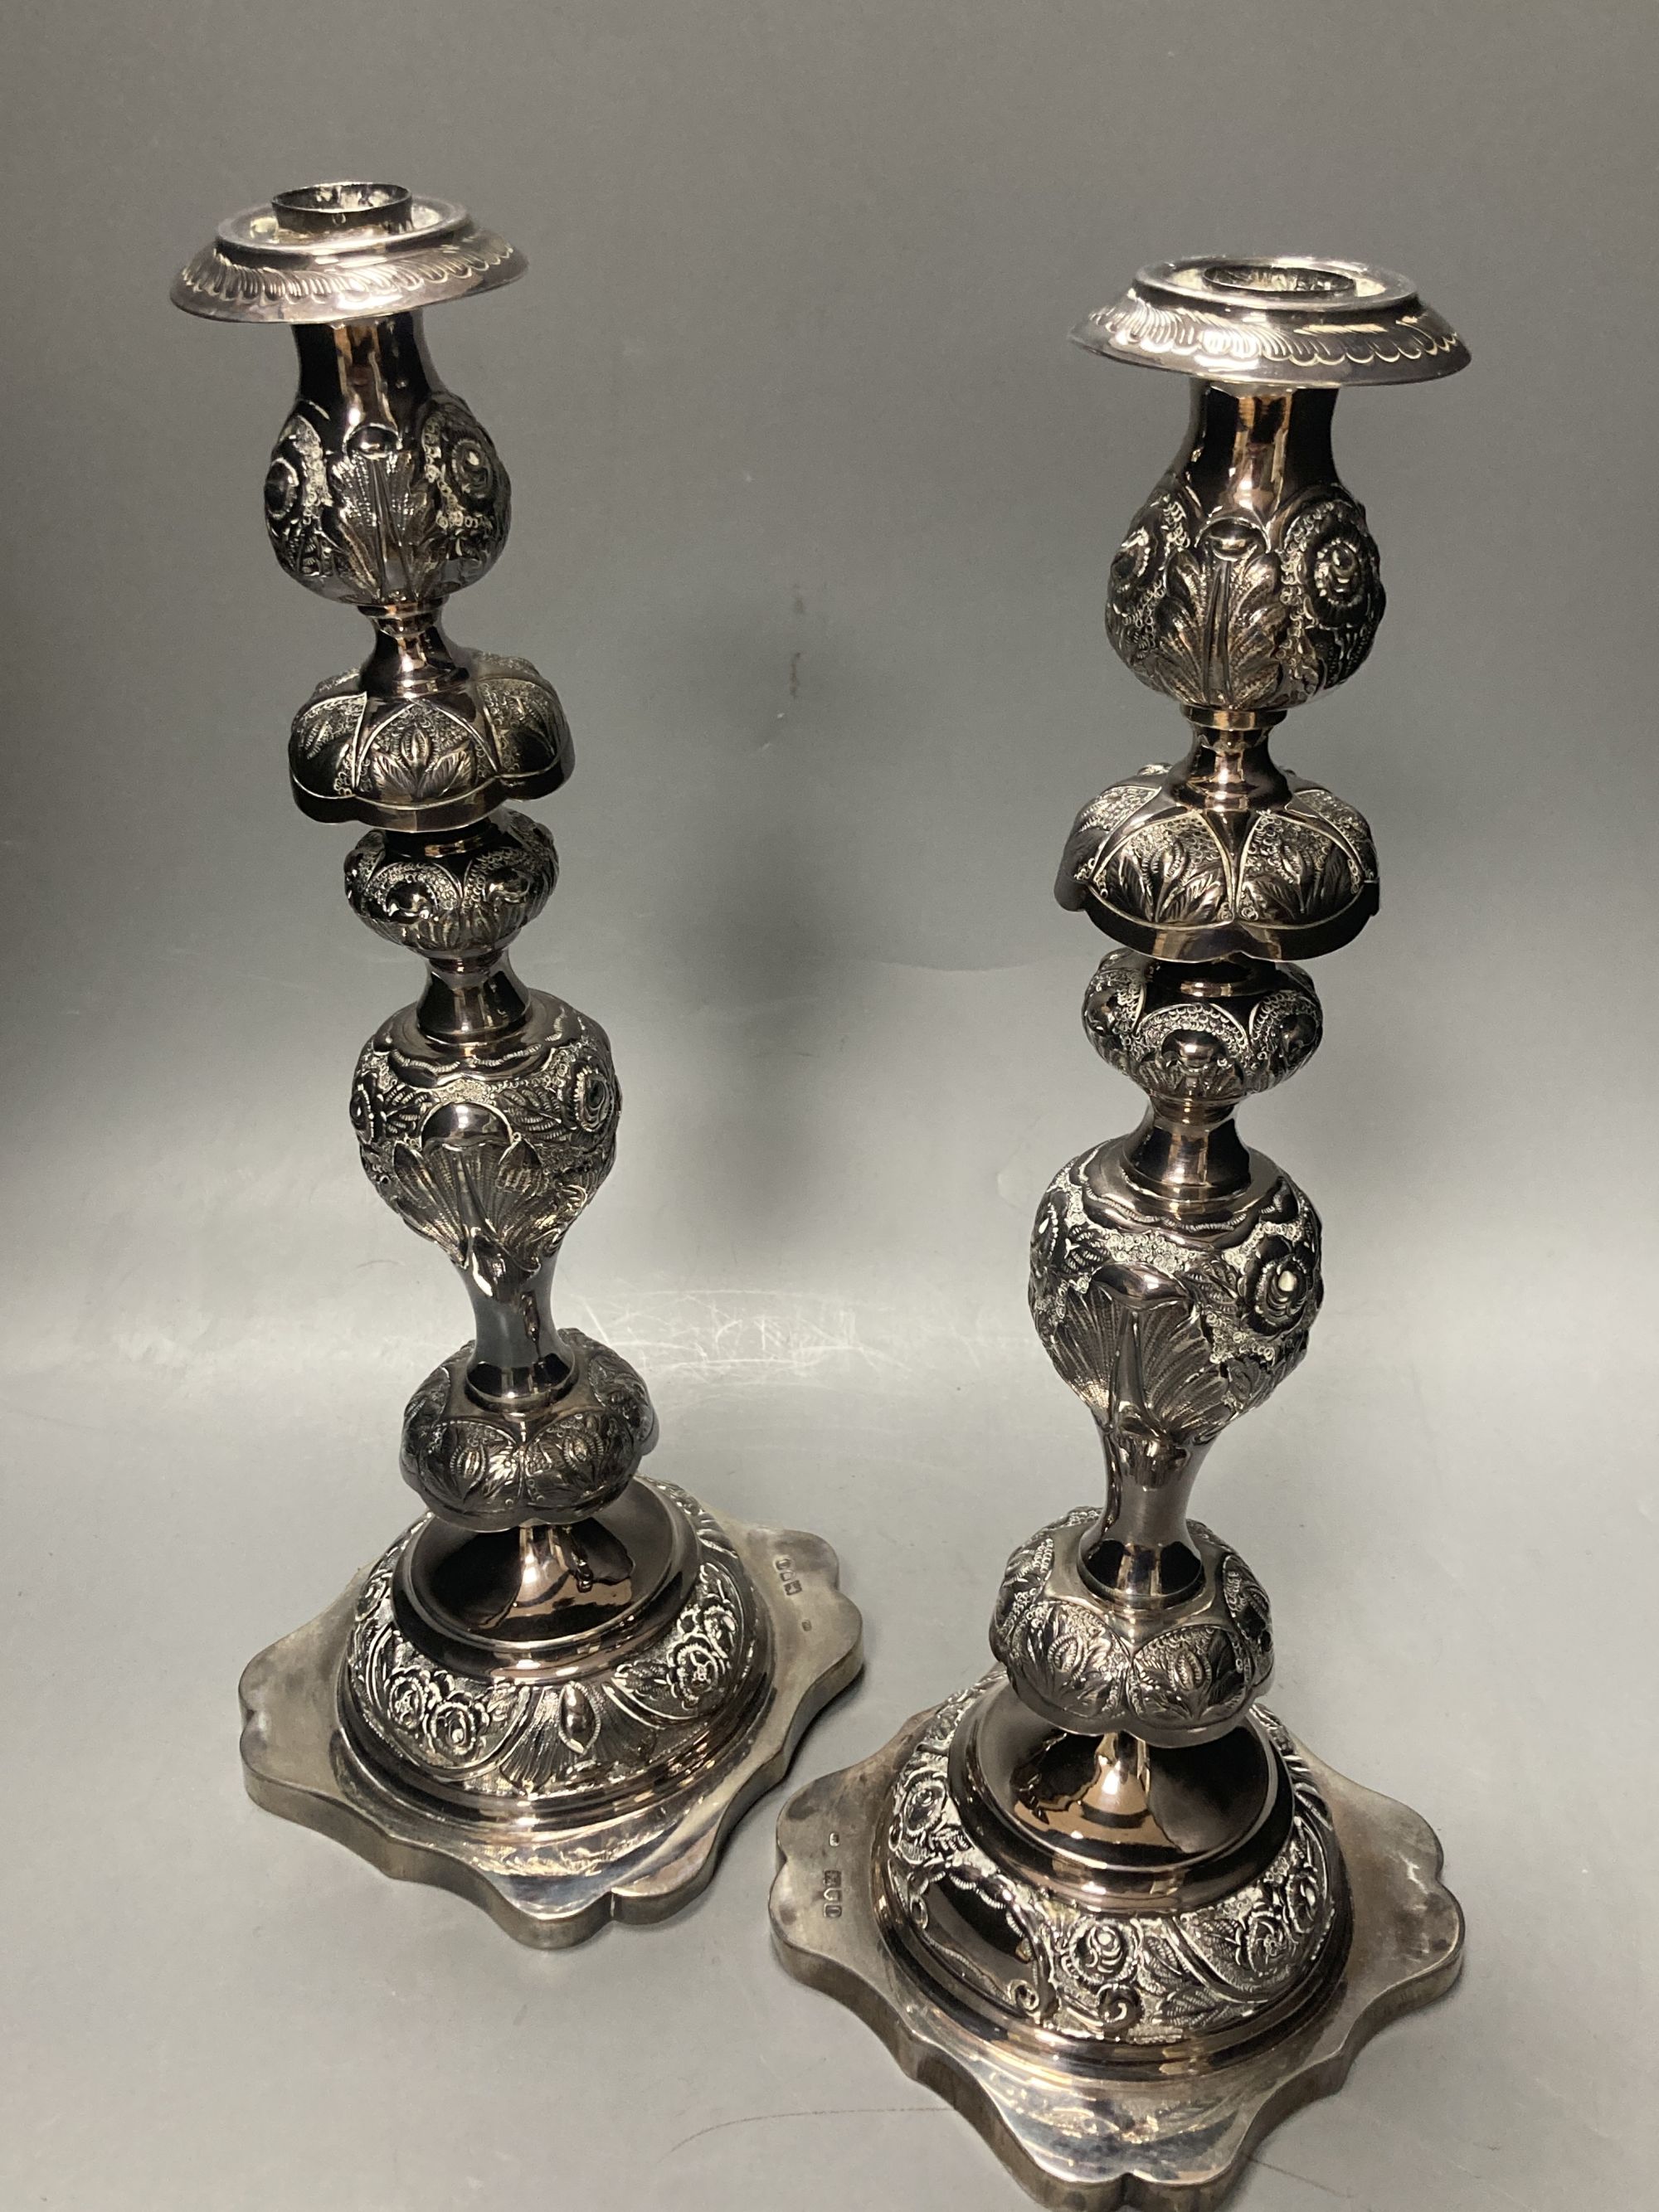 A pair of Edwardian silver Sabbath Day candlesticks, by Rosenzweig & Taitelbaum, London, 1909, 37.5cm, 34oz.